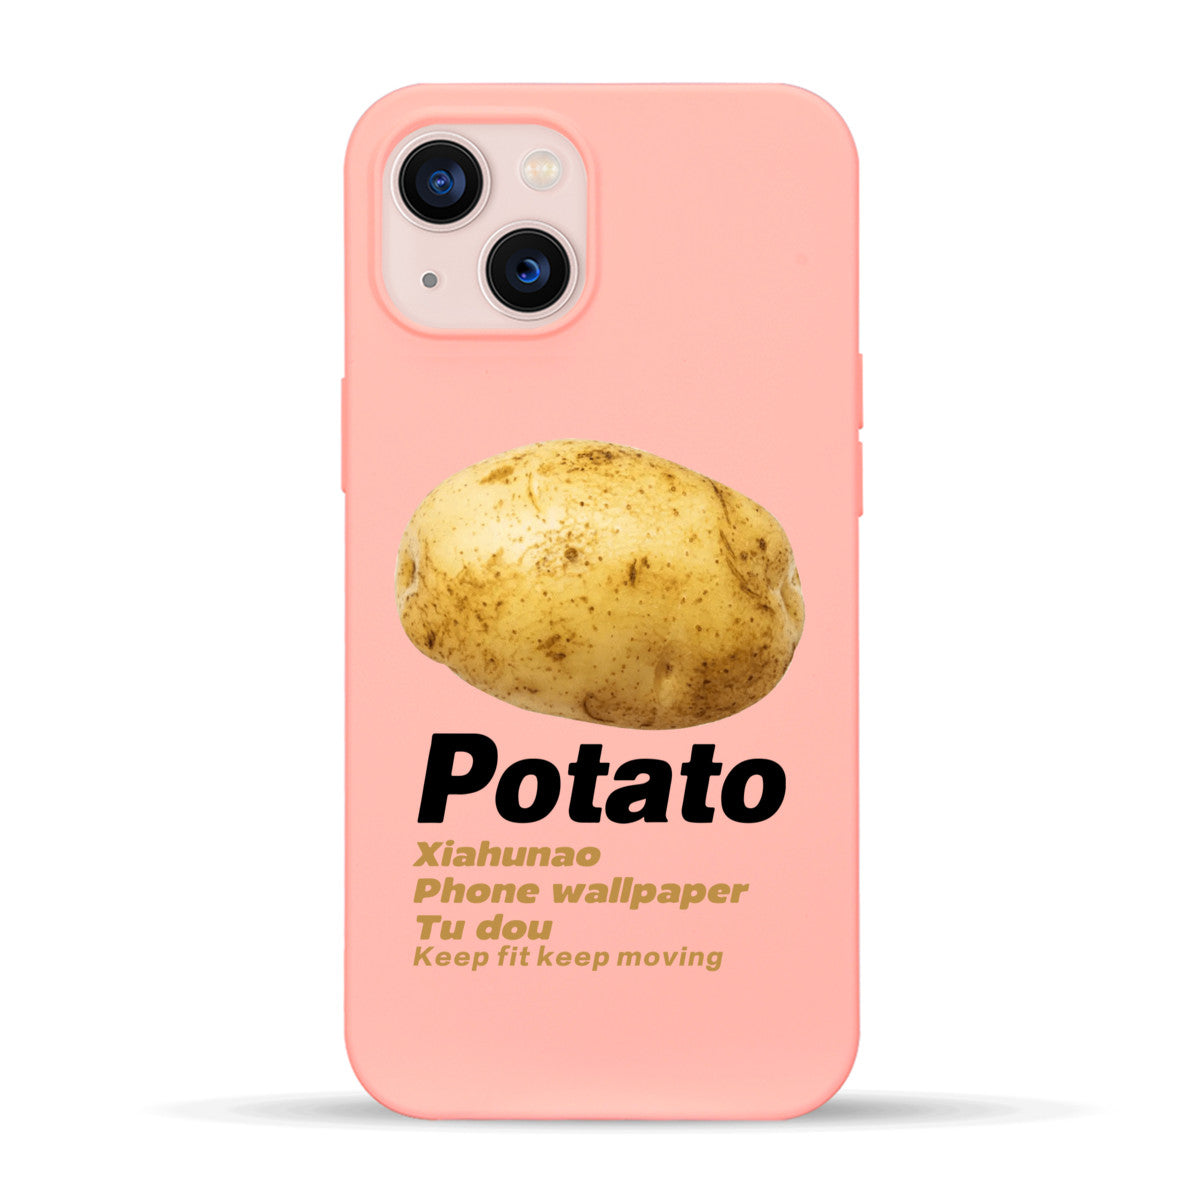 Potato - iPhone Case